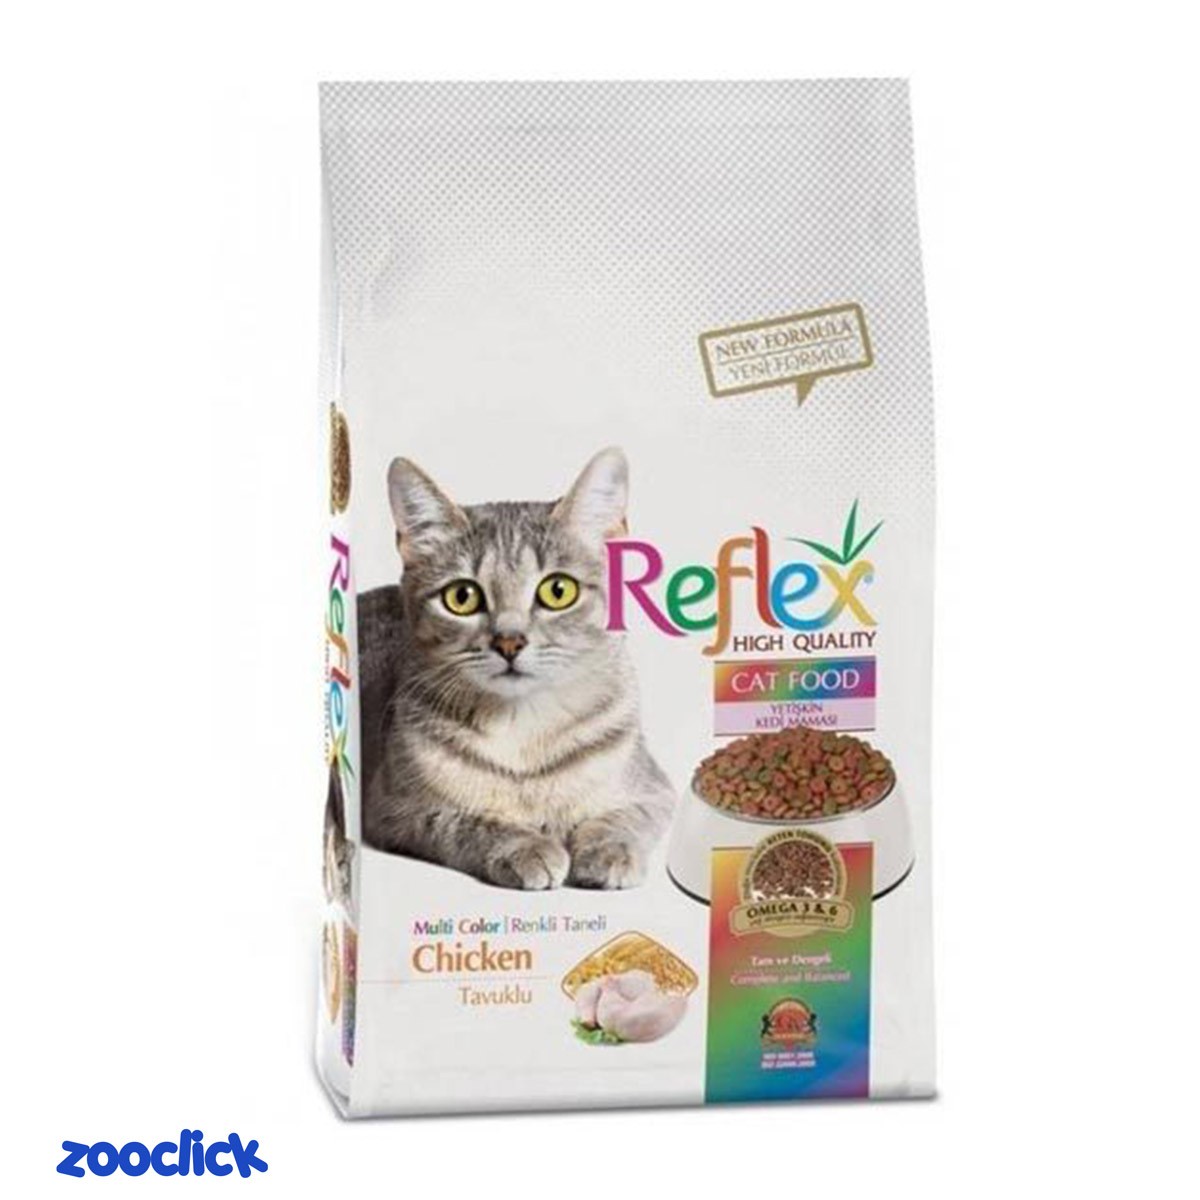 reflex multi color cat food with chicken غذای خشک گربه مولتی کالر رفلکس با طعم مرغ